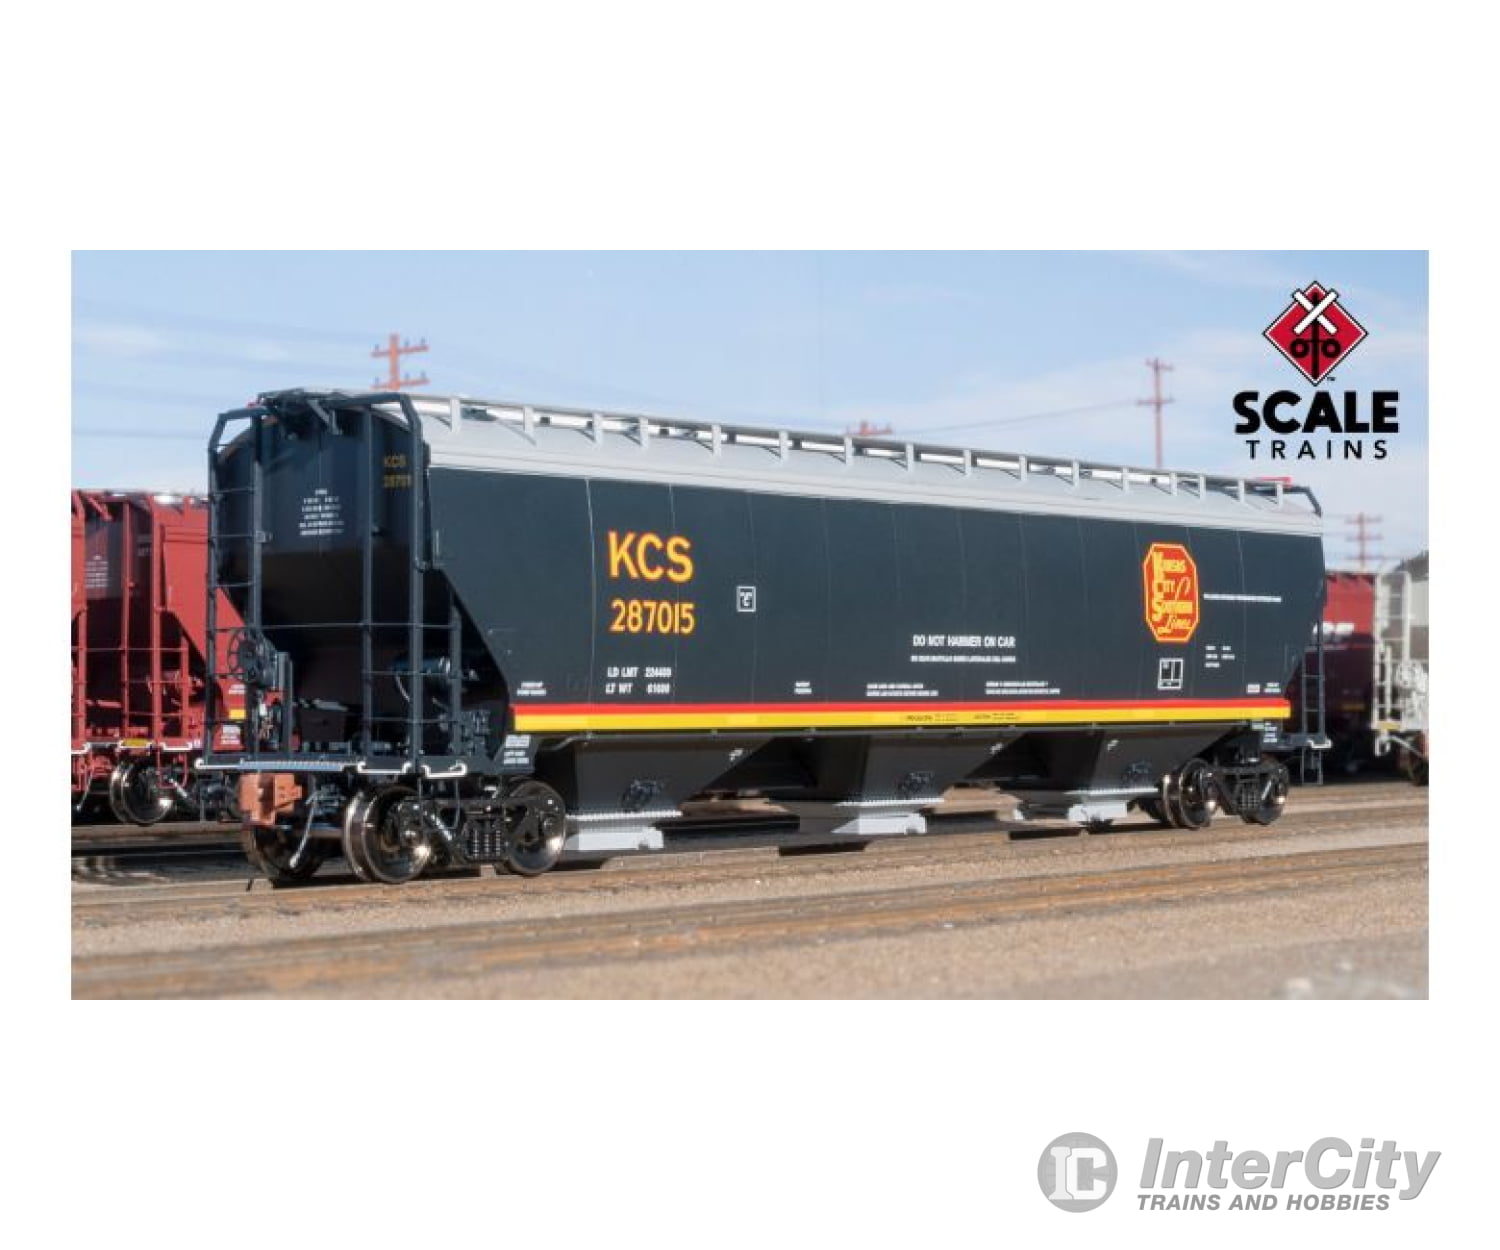 Scale Trains Sxt30819 Rivet Counter Ho Gunderson Covered Hopper Kansas City Southern - Belle Rd#